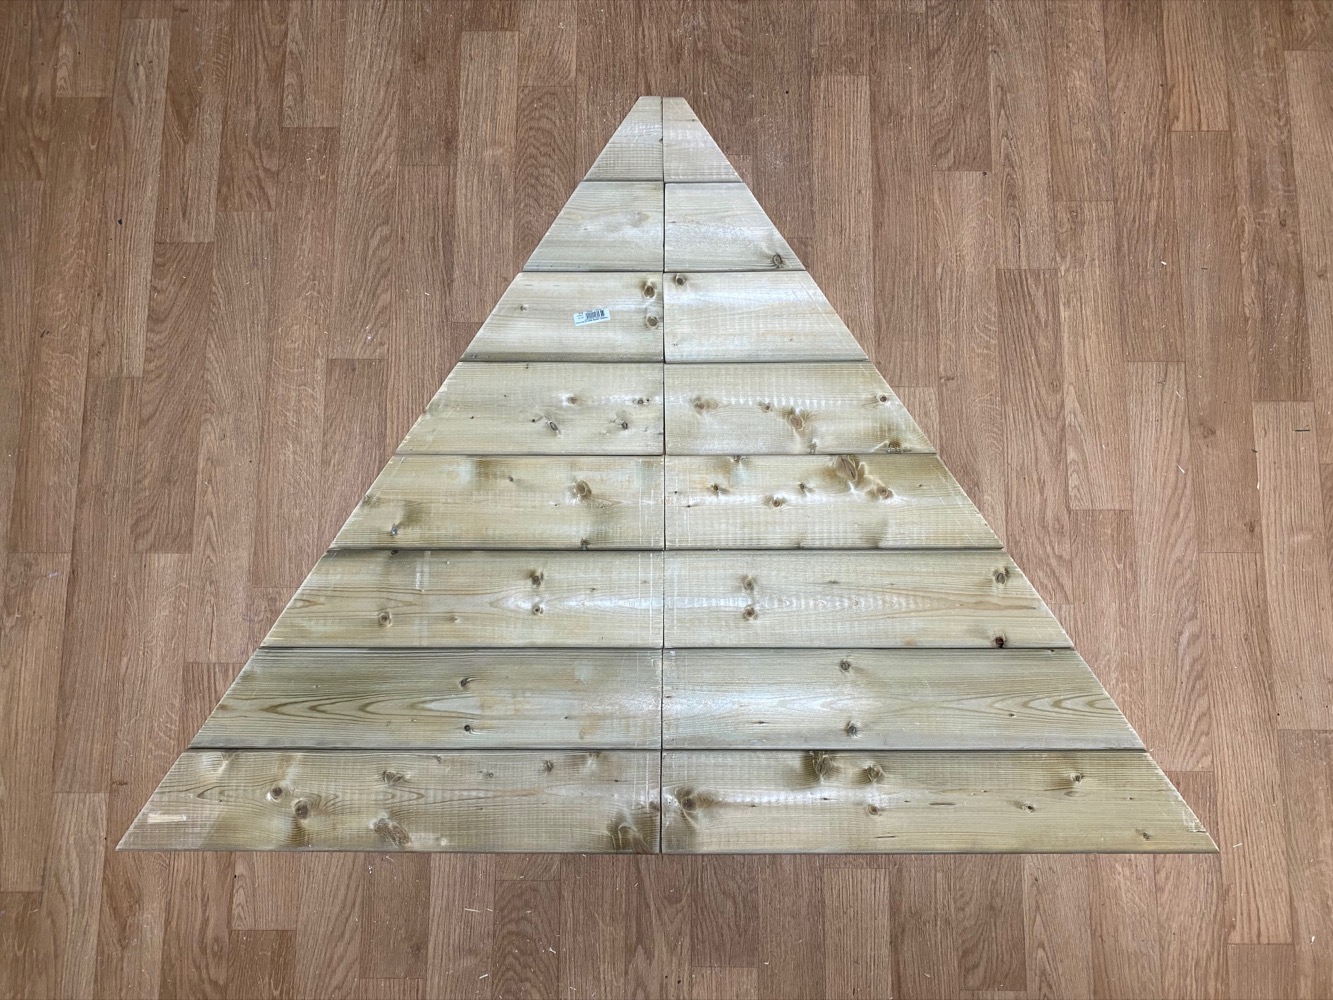 Wooden pyramid